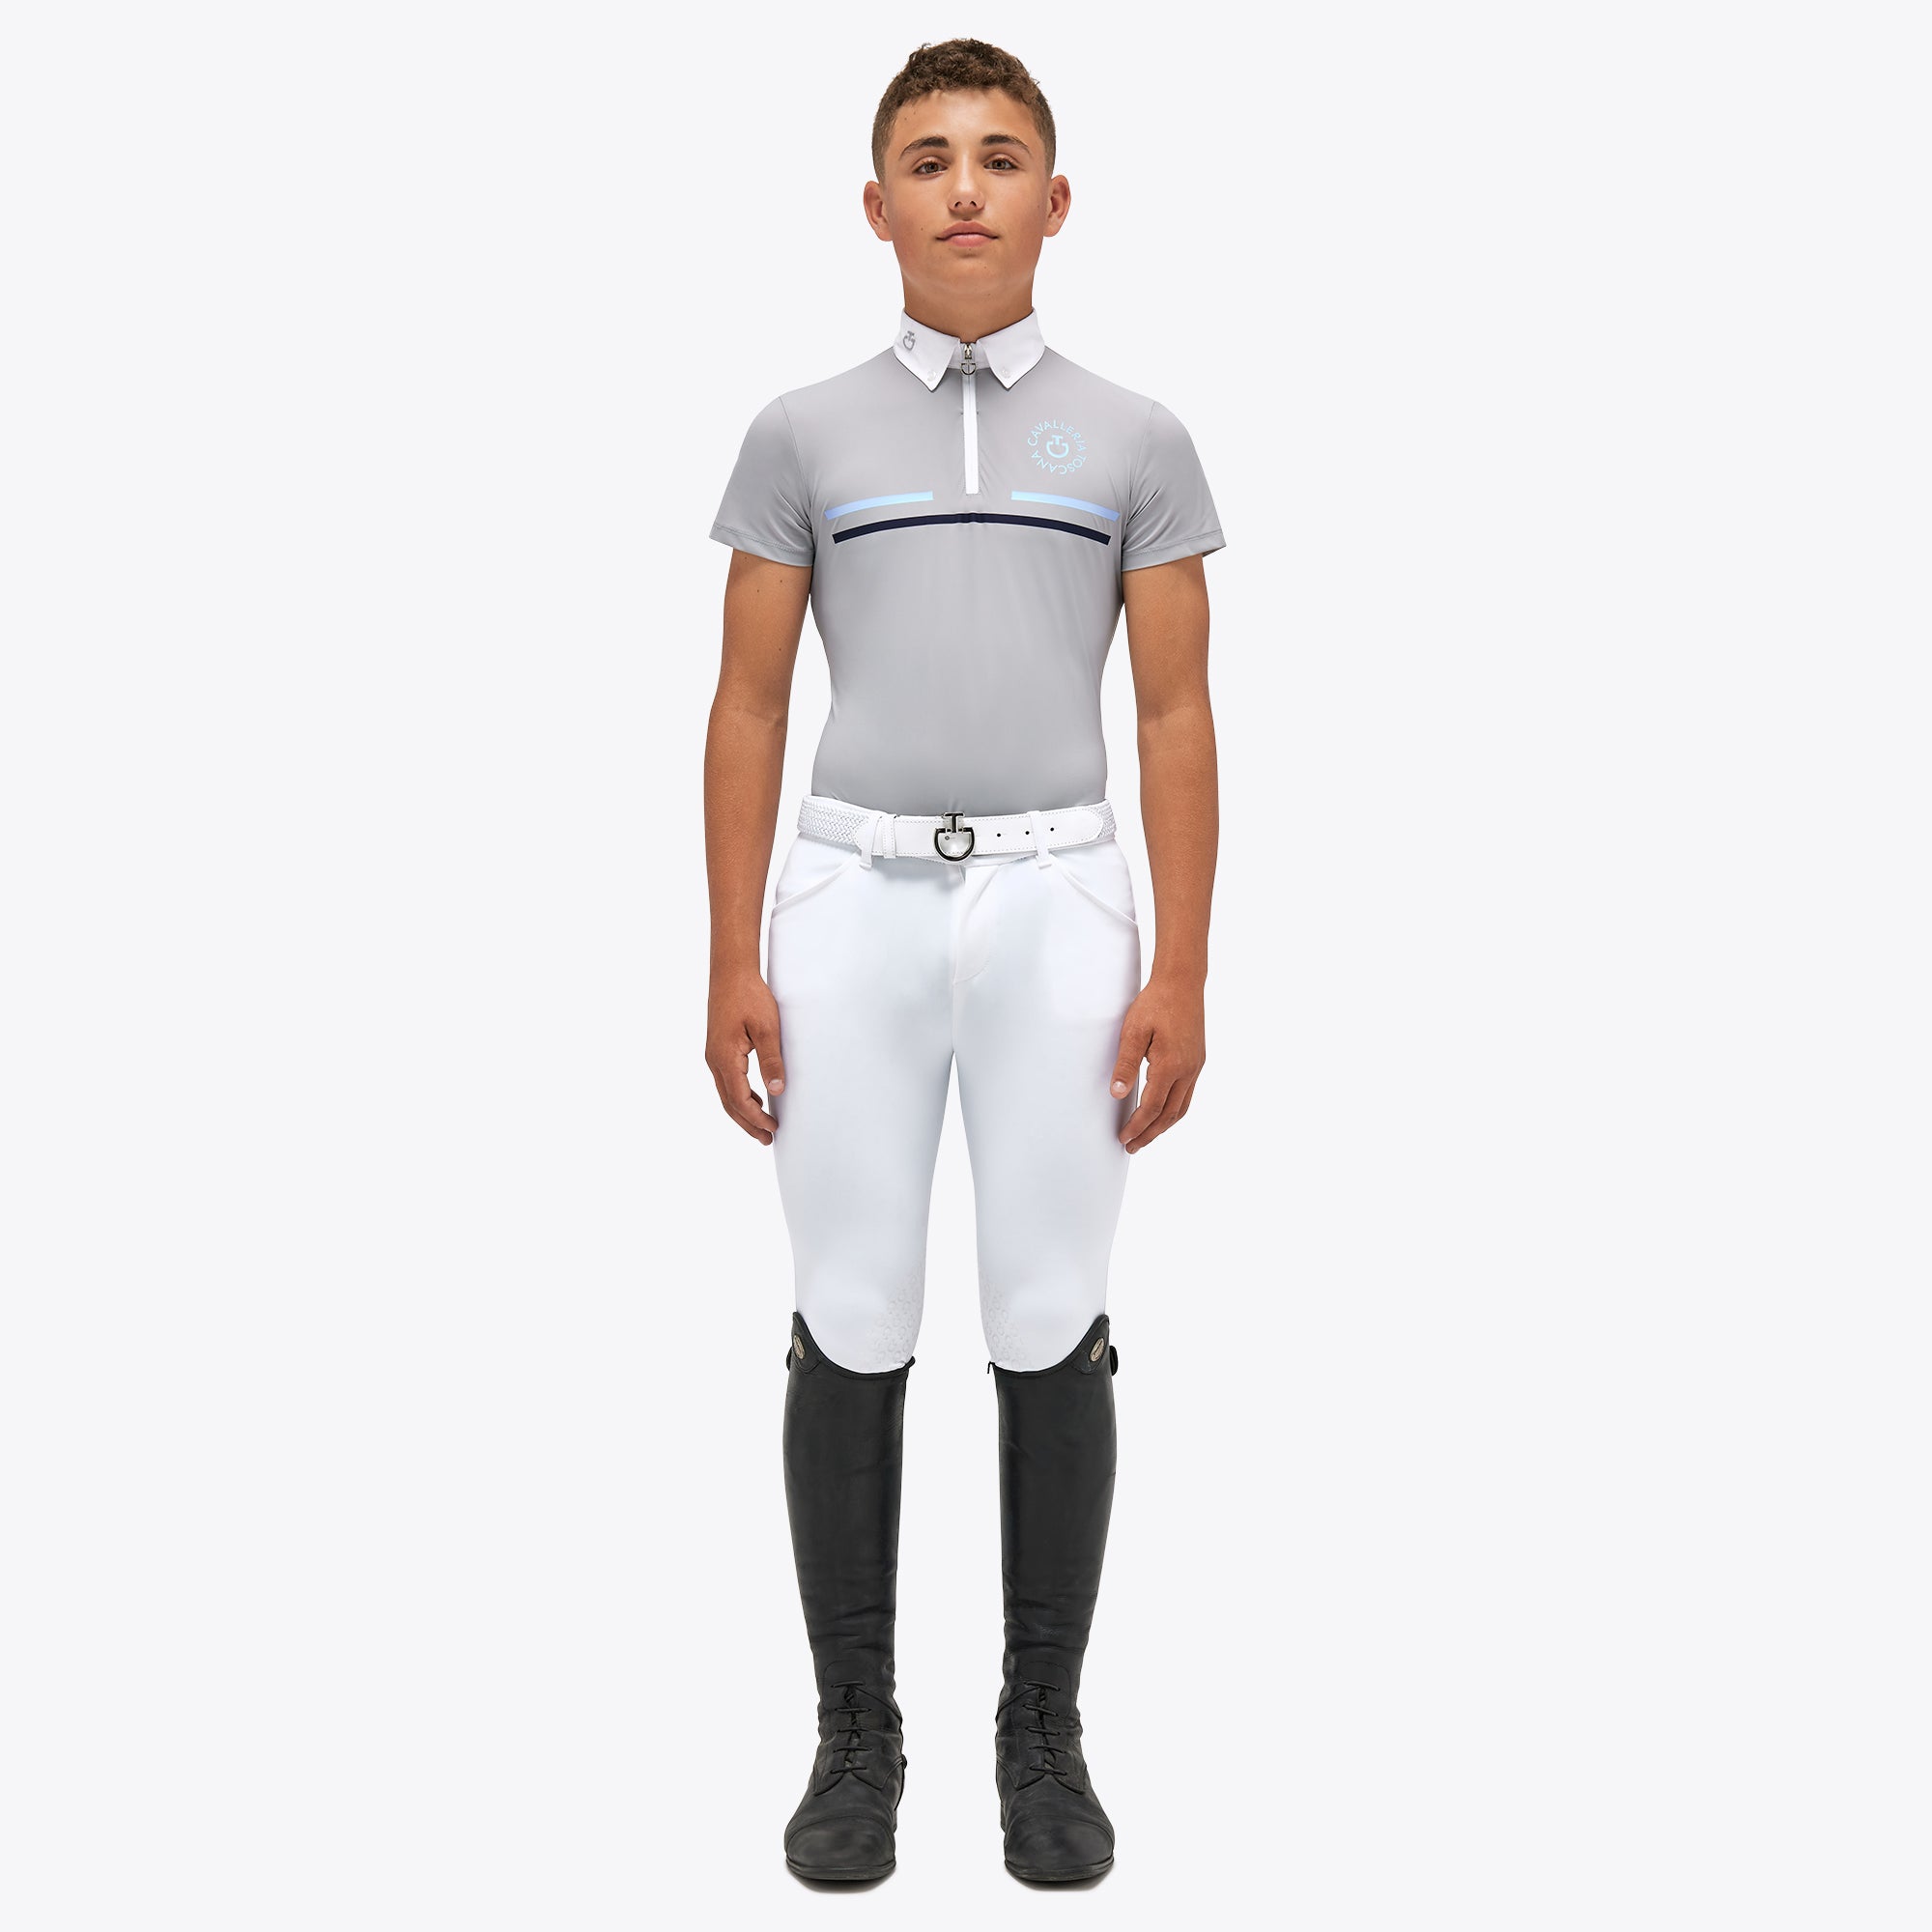 Boys CT Orbit Print Jersey Show Shirt - Light Grey (LAST ONE - AGE 12)